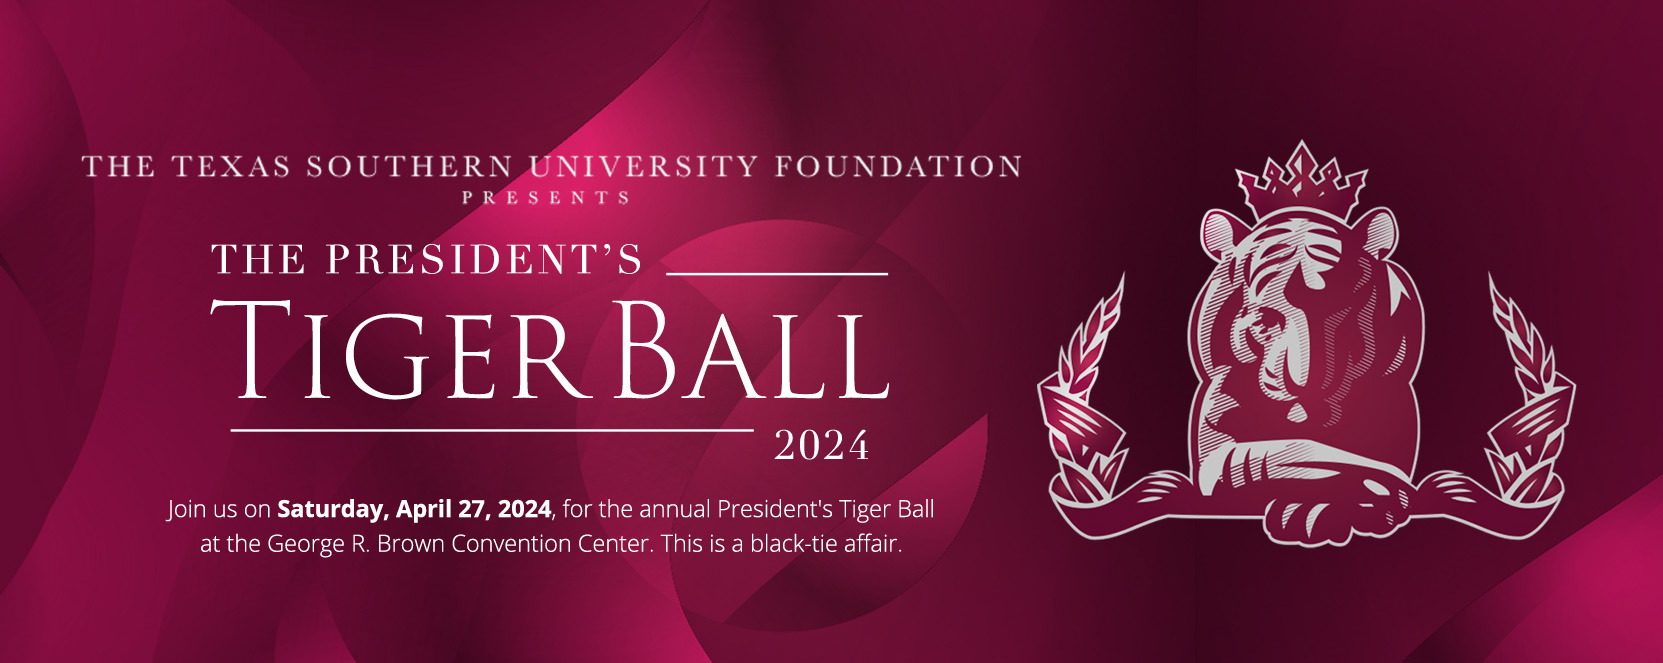 President's Tiger Ball 